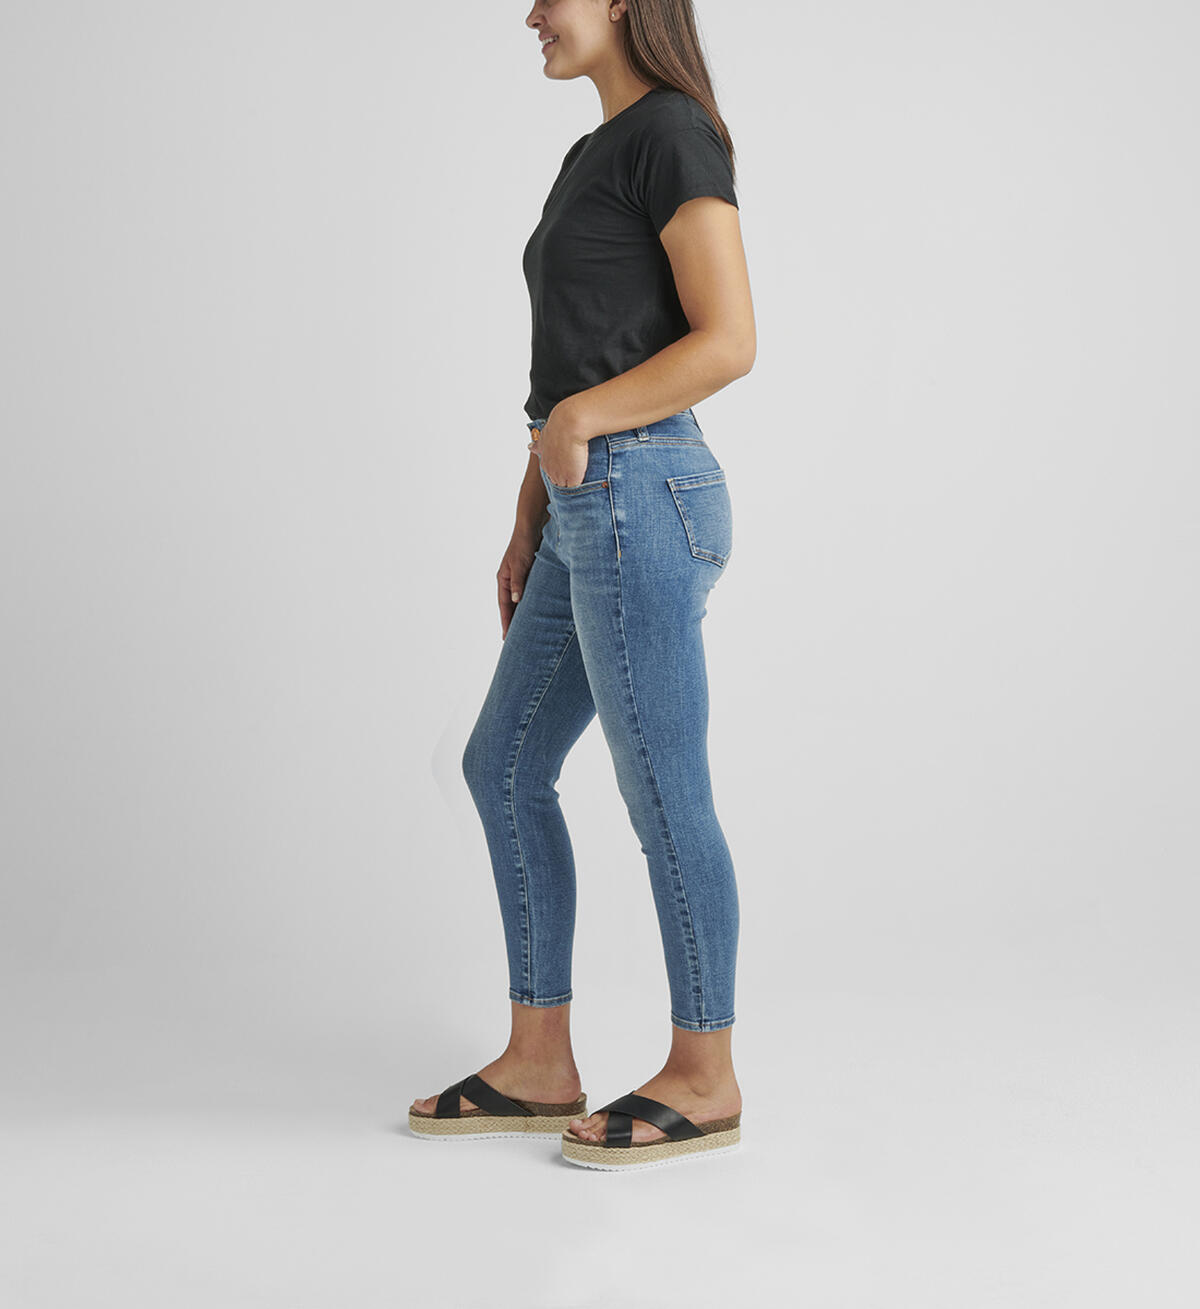 Valentina High Rise Skinny Crop Pull-On Jeans, , hi-res image number 2